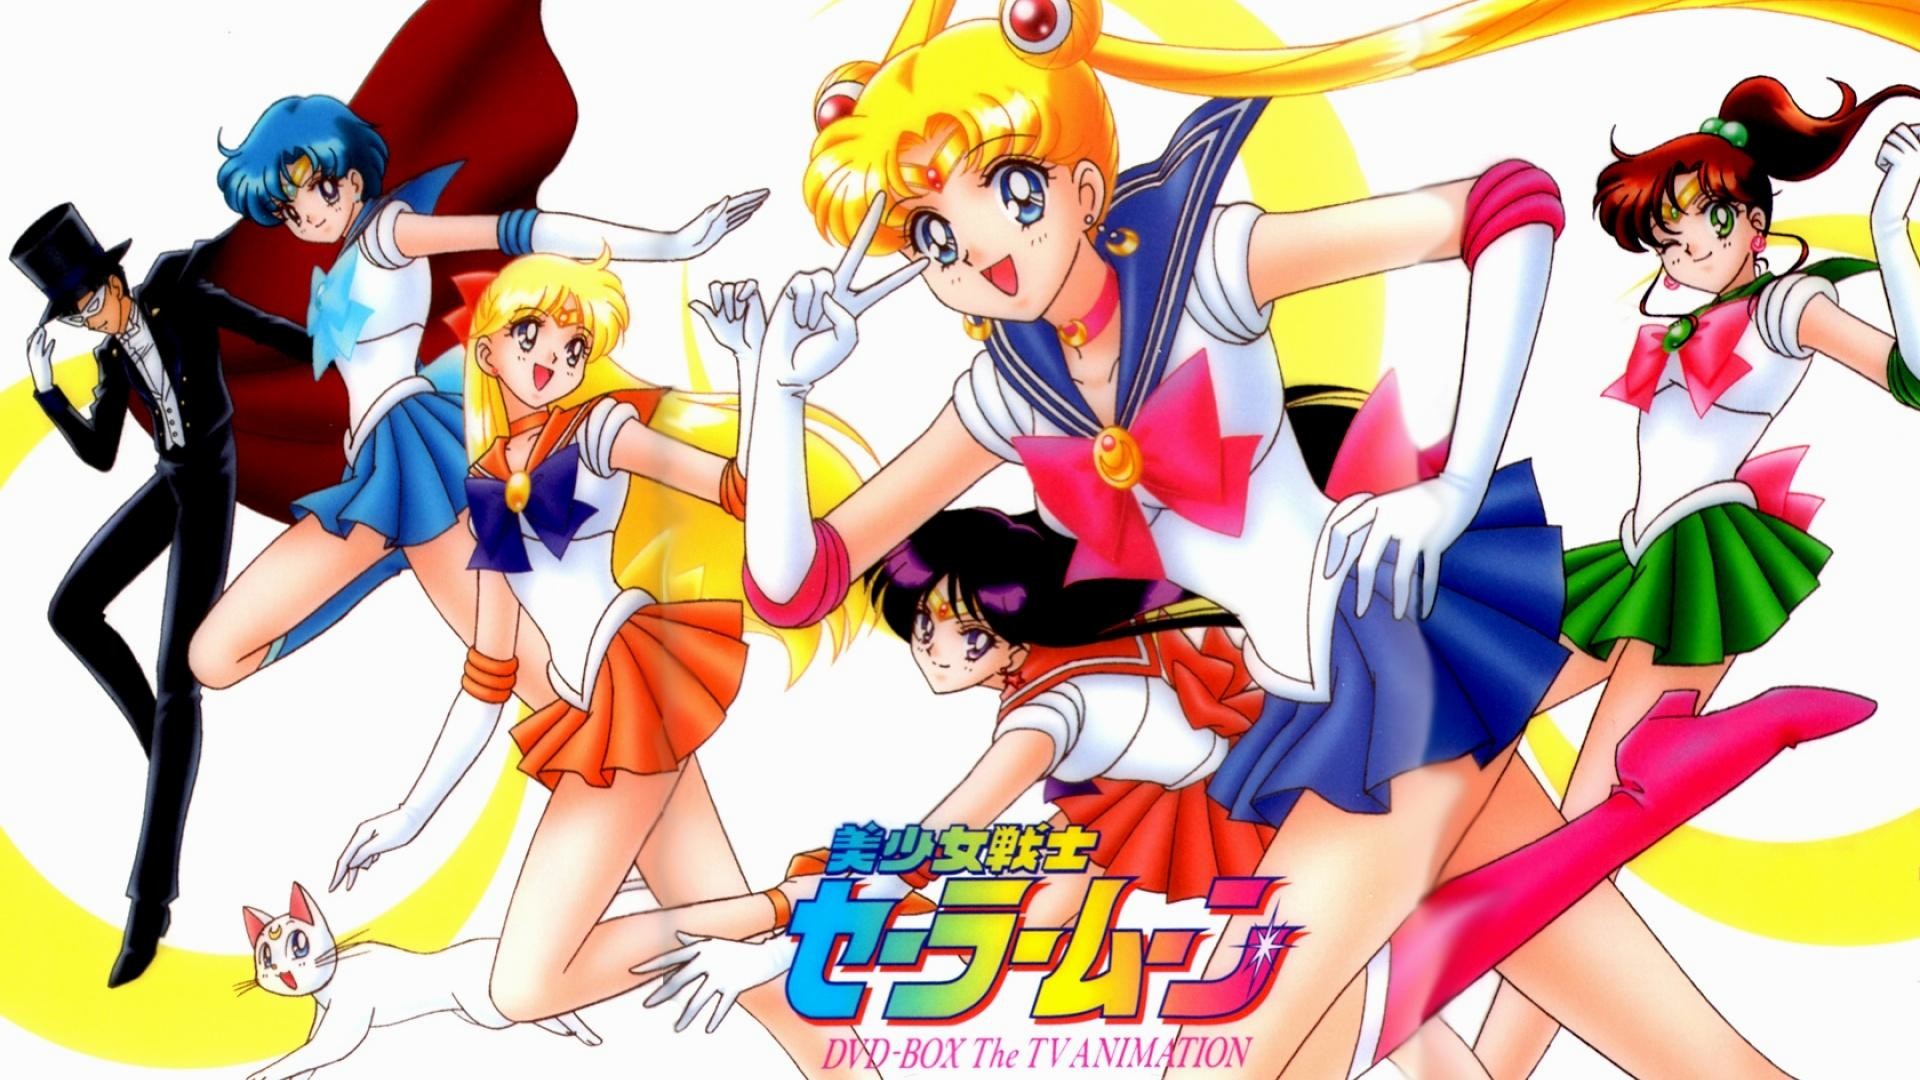 Sailor moon desktop wallpaper